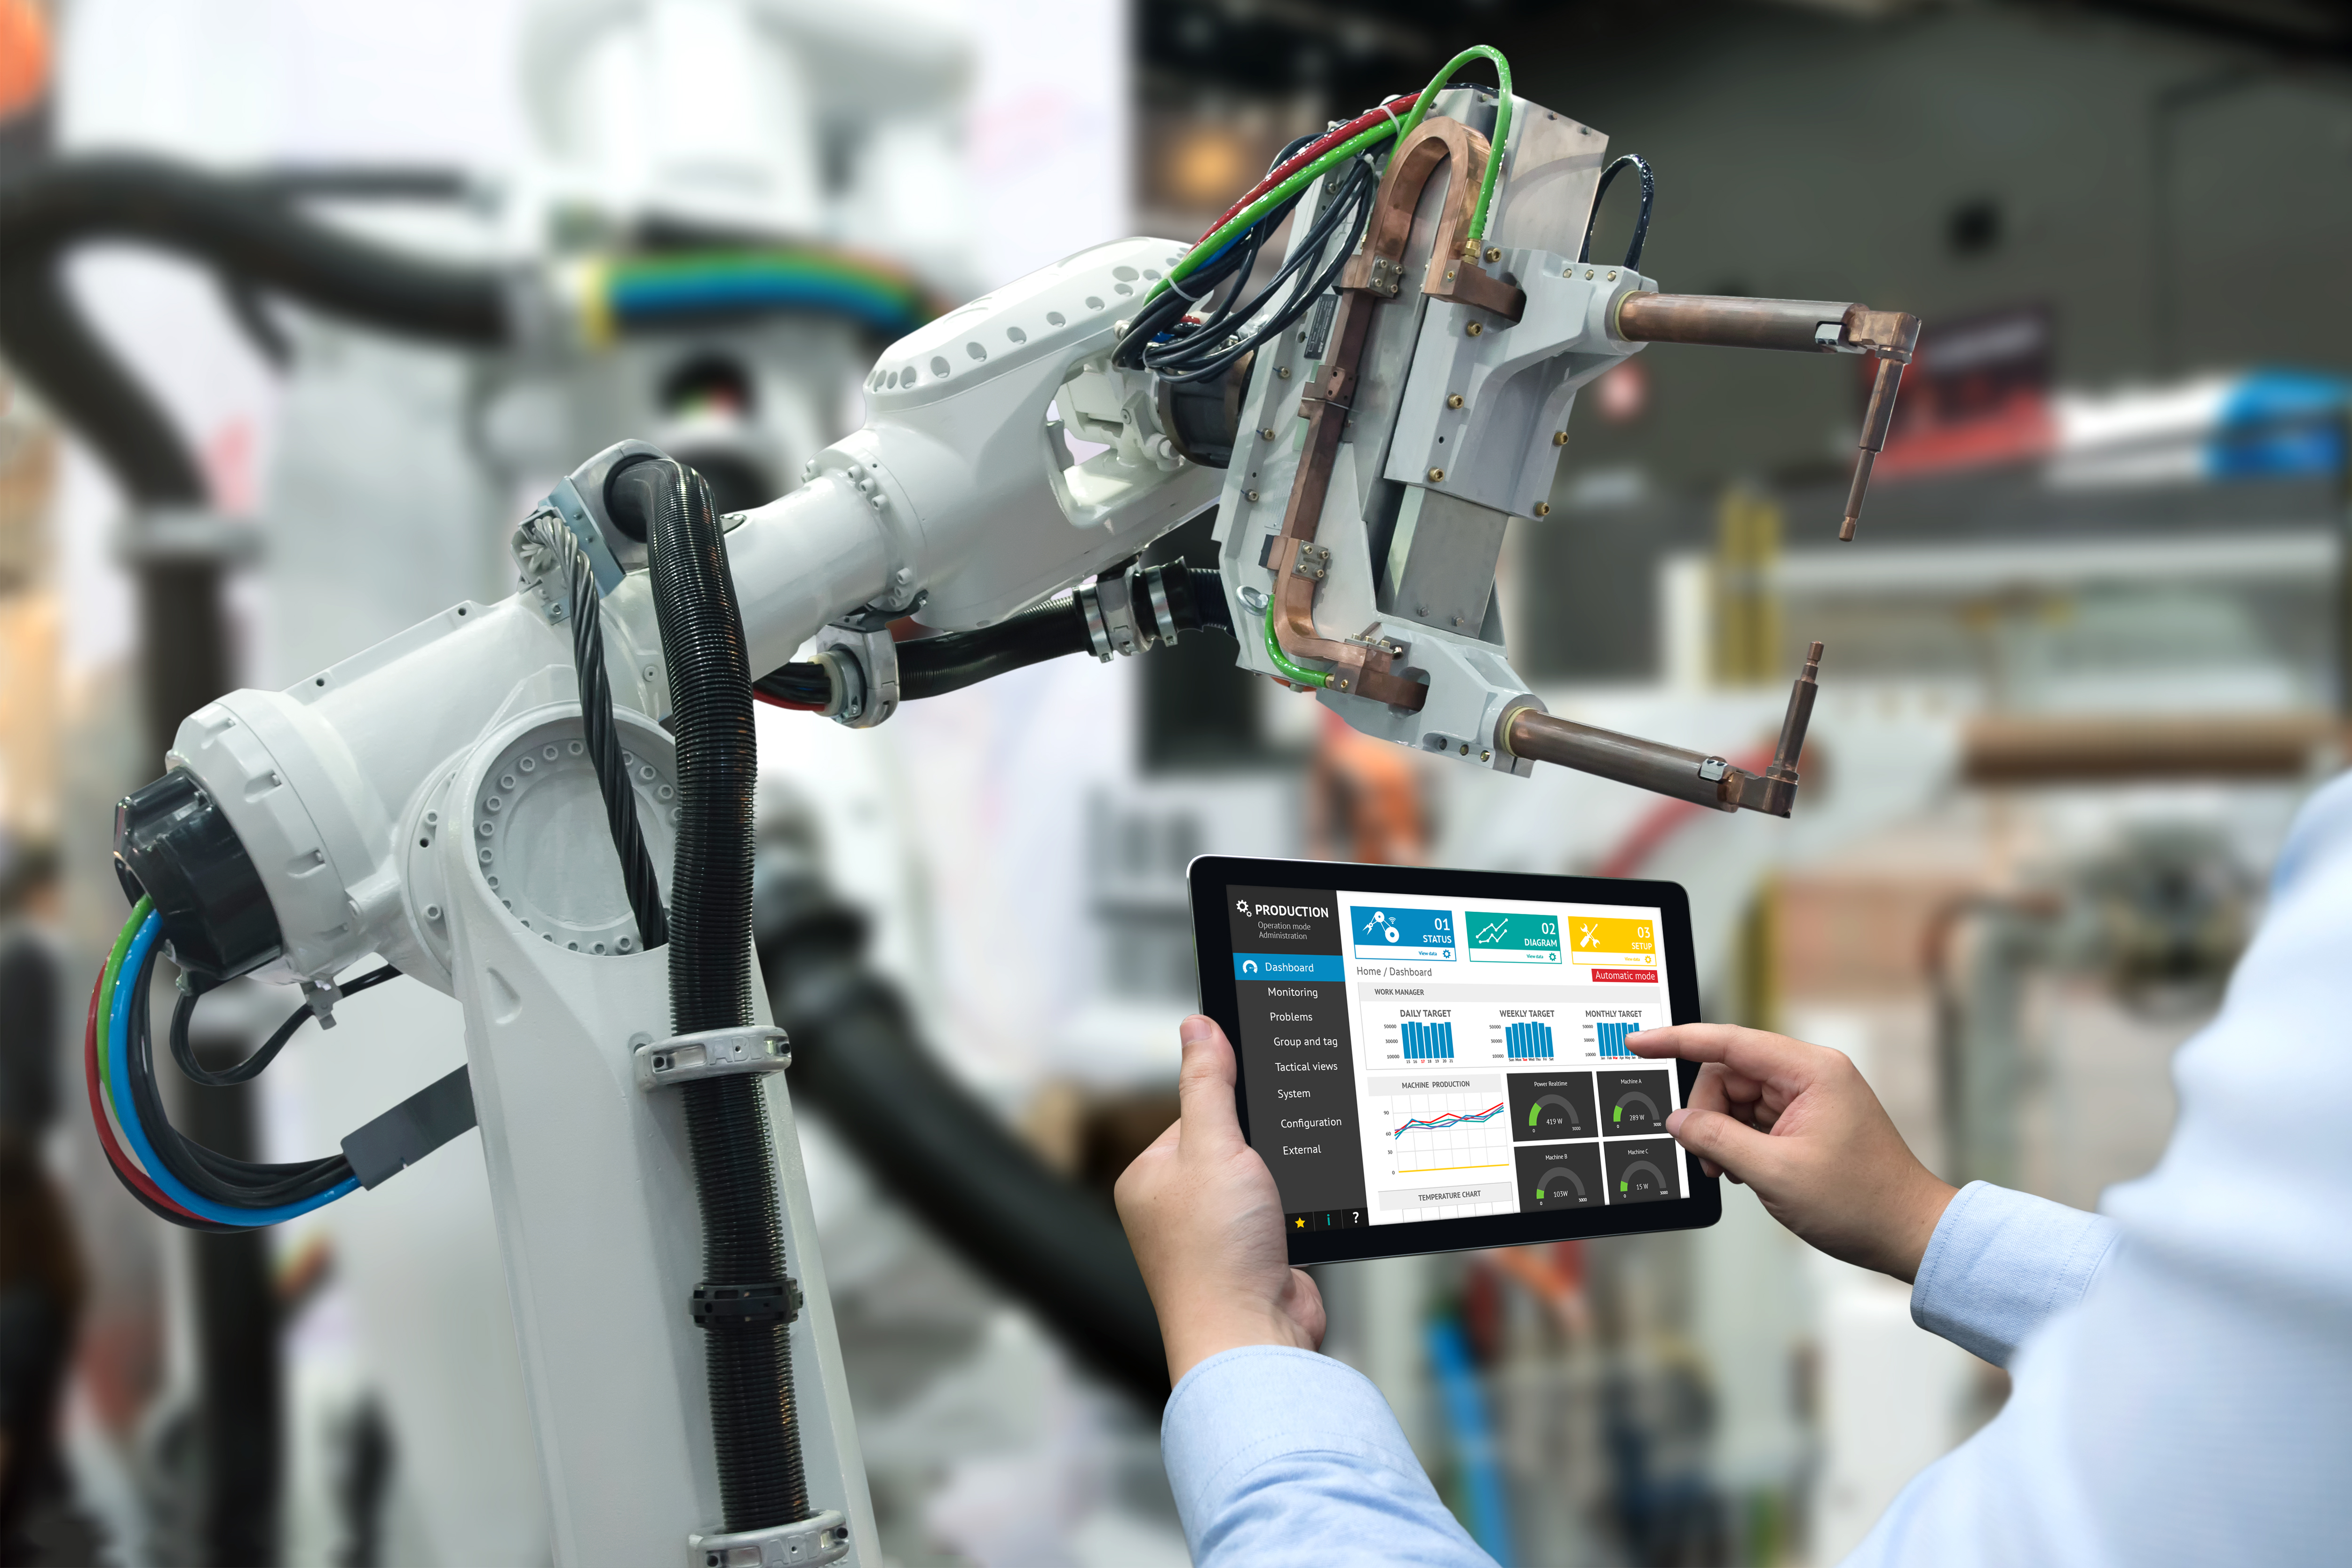 Industrie 4.0 - Roboterarm durch Tablet gesteuert